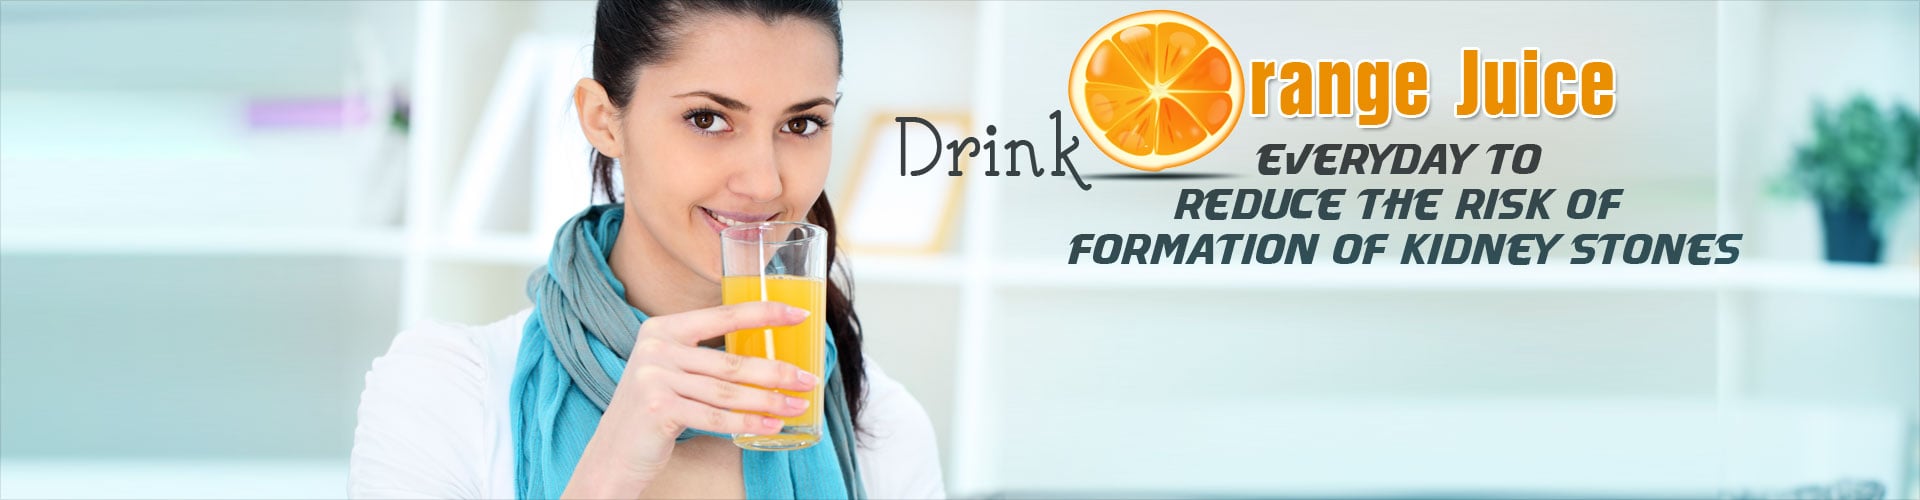 Drink Orange Juice Everyday to Reduce Risk of Kidney Stones